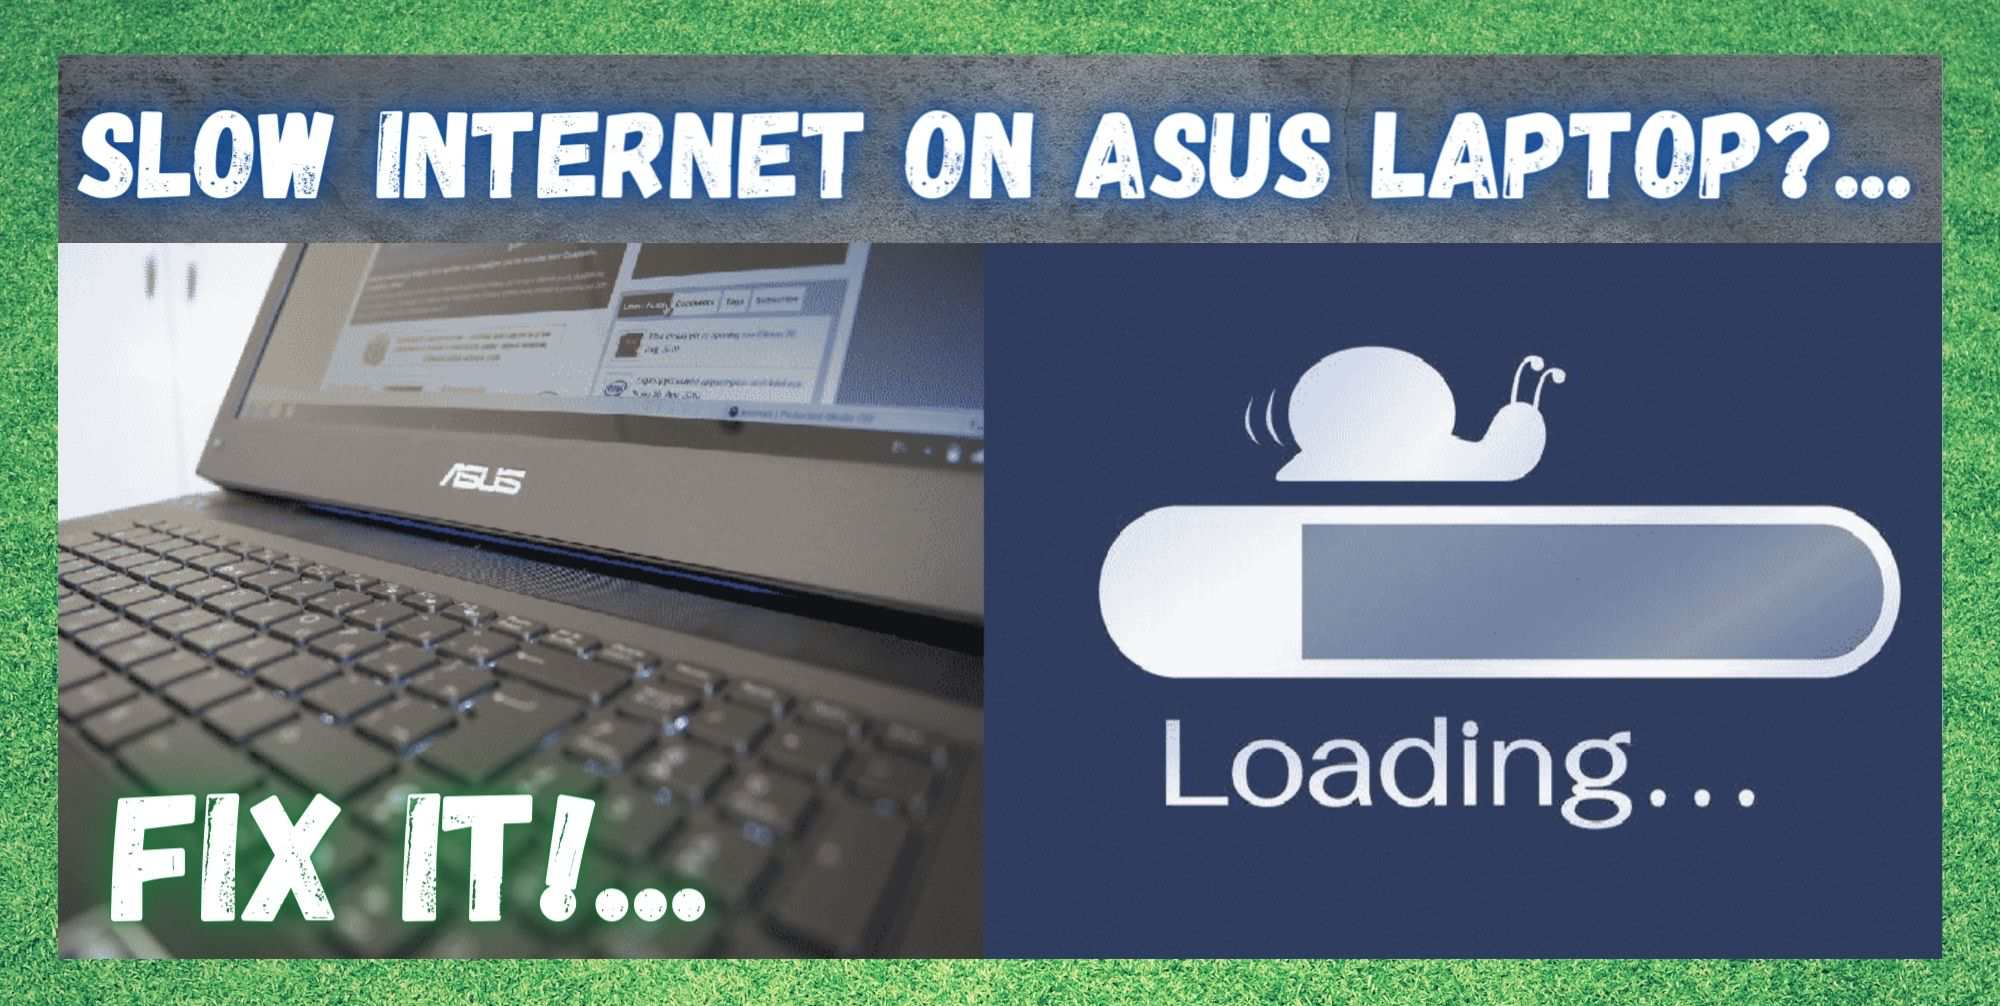 ASUS Laptop Slow Internet